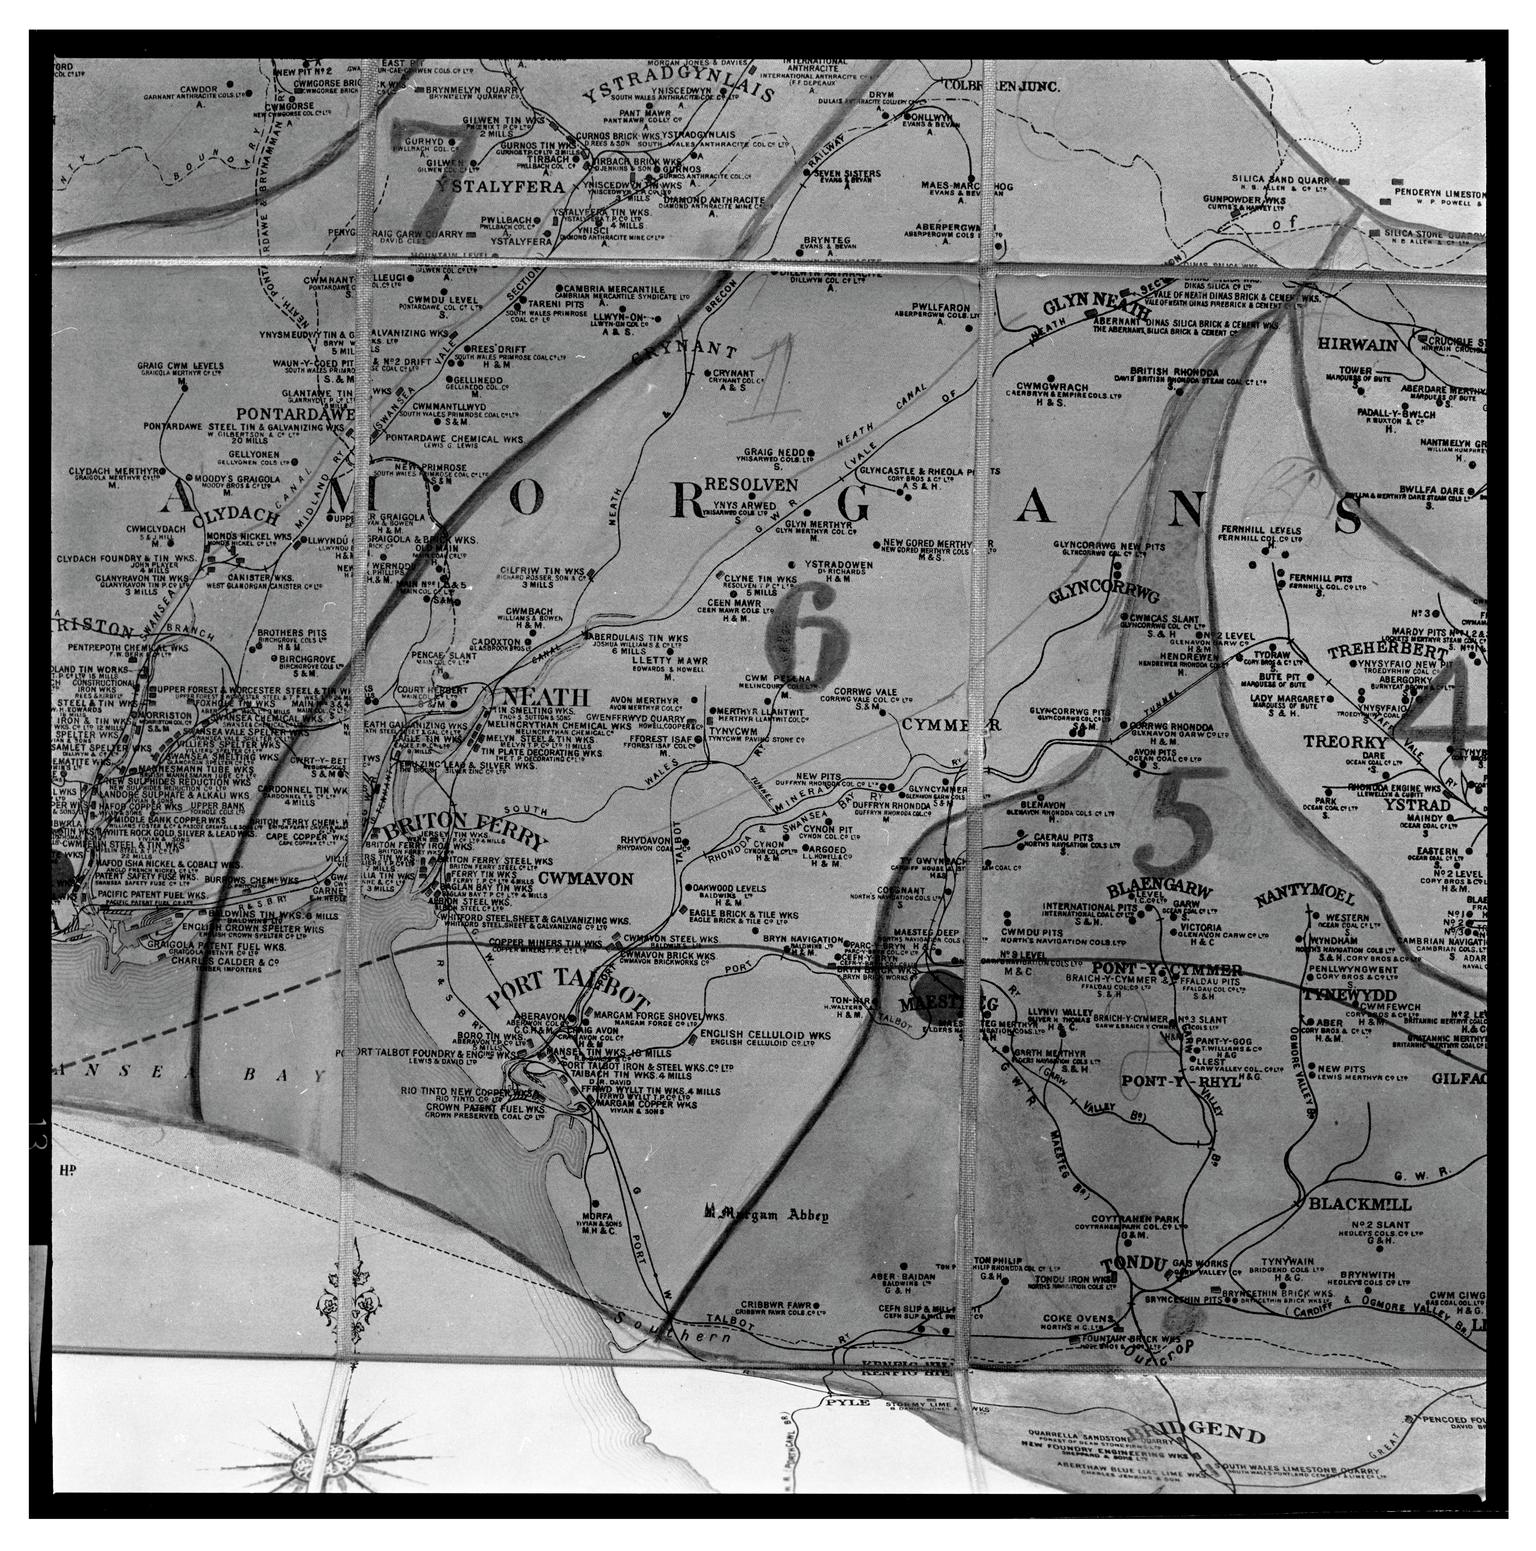 South Wales coalfield map, film negative